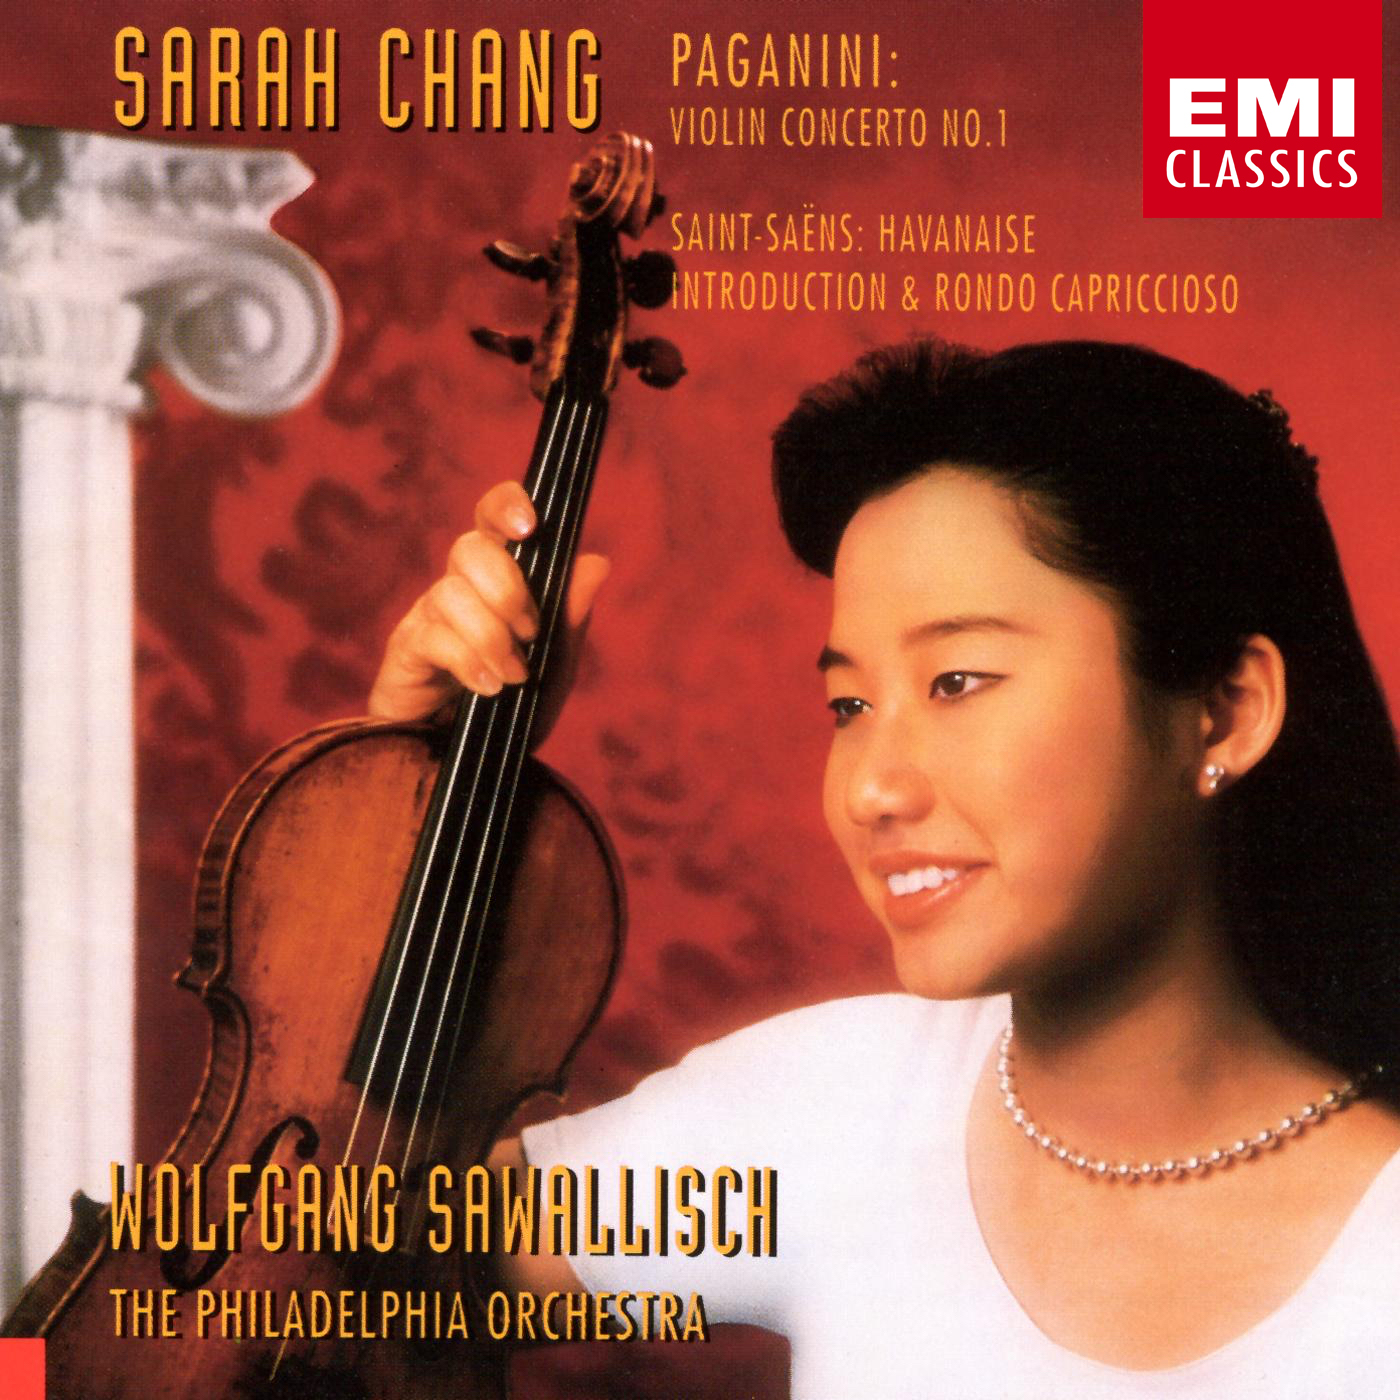 Paganini: Violin Concerto No. 1 - Saint-Saëns: Havanaise